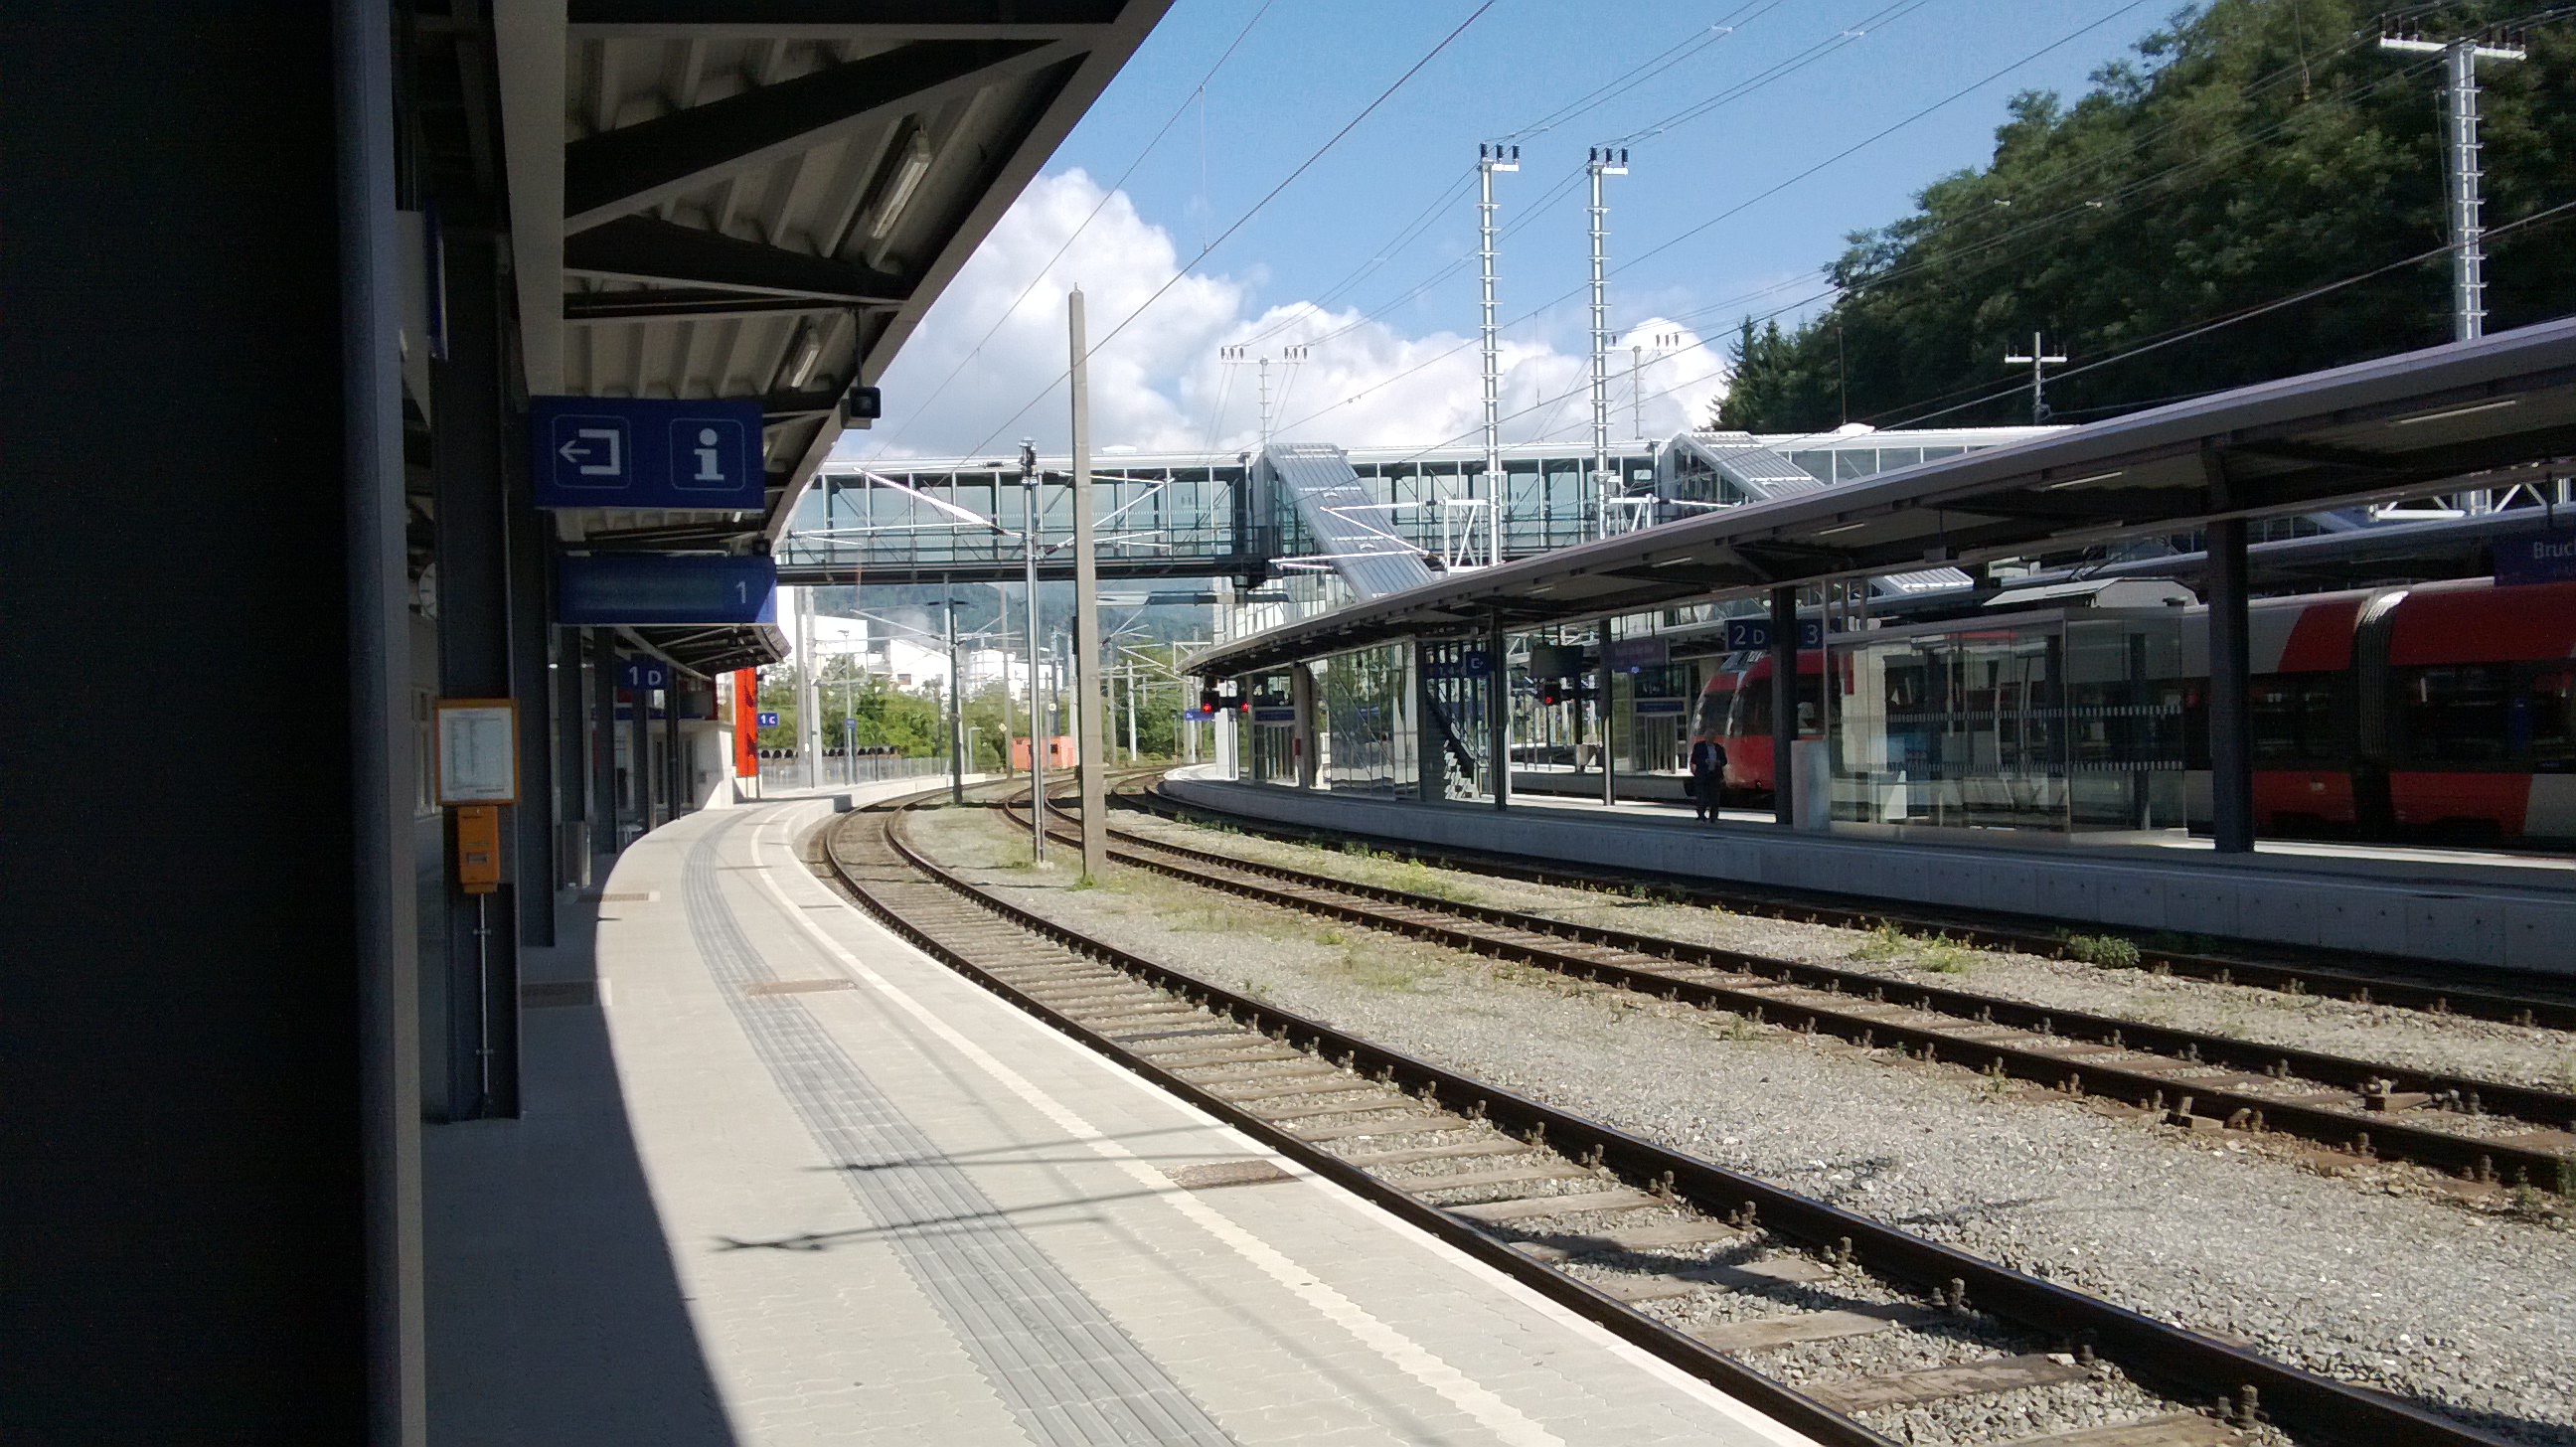 Die S-Bahn Steiermark - Verkehrs-Server des Landes Steiermark